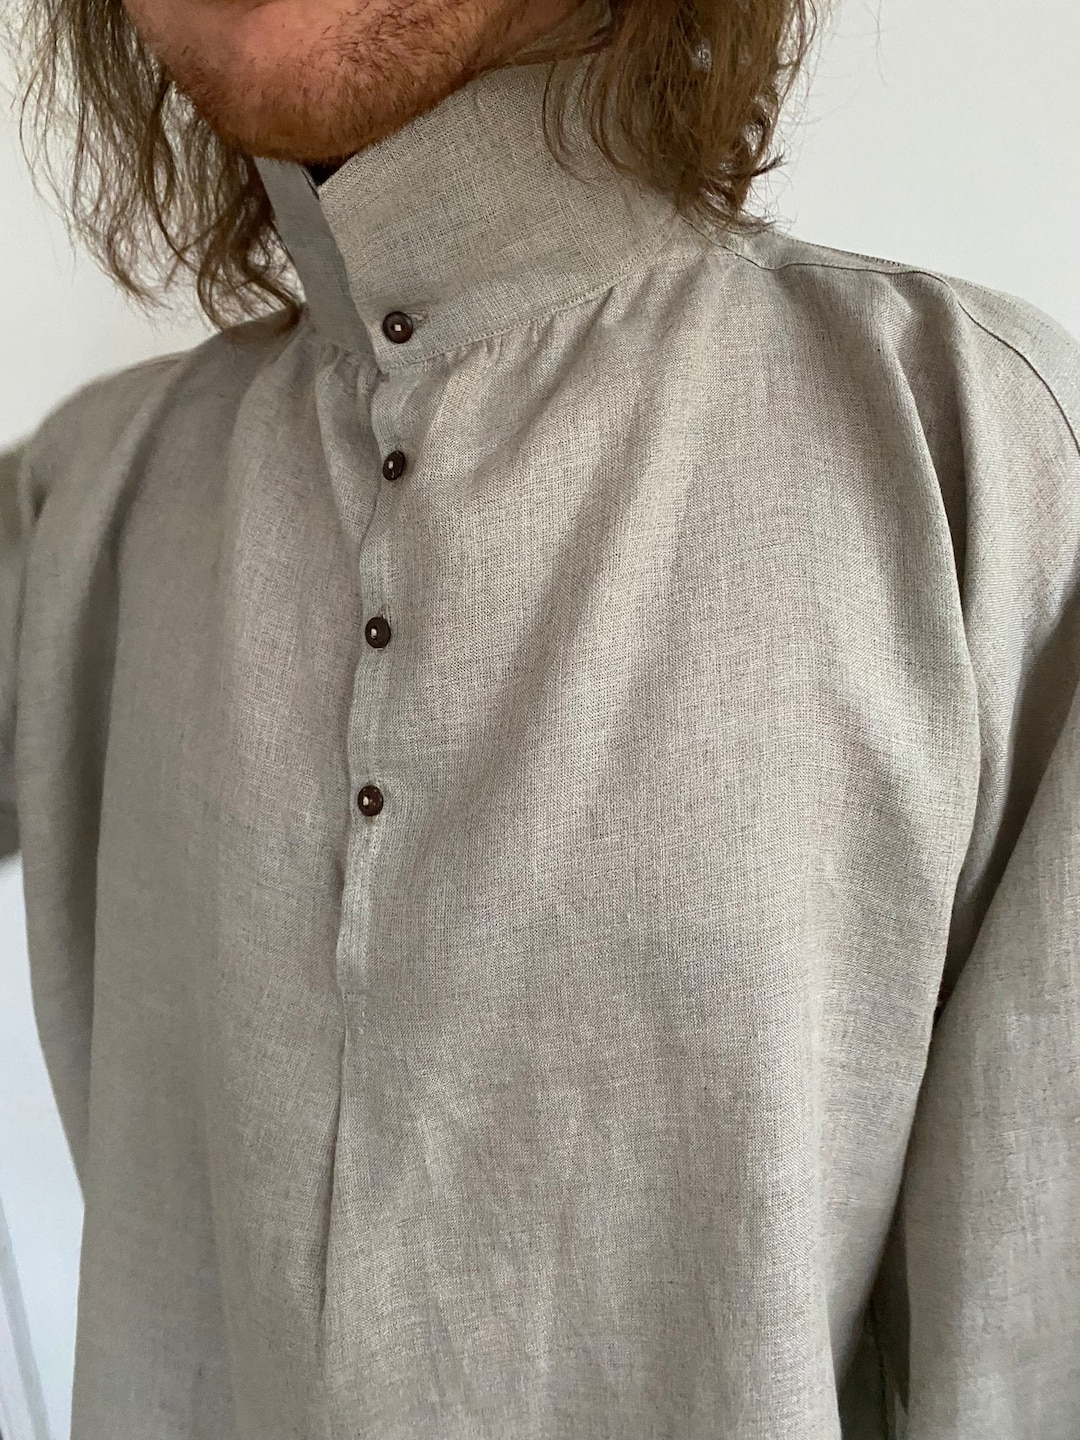 Men's Shirt in Natural Linen, C18th Style - Etsy UK